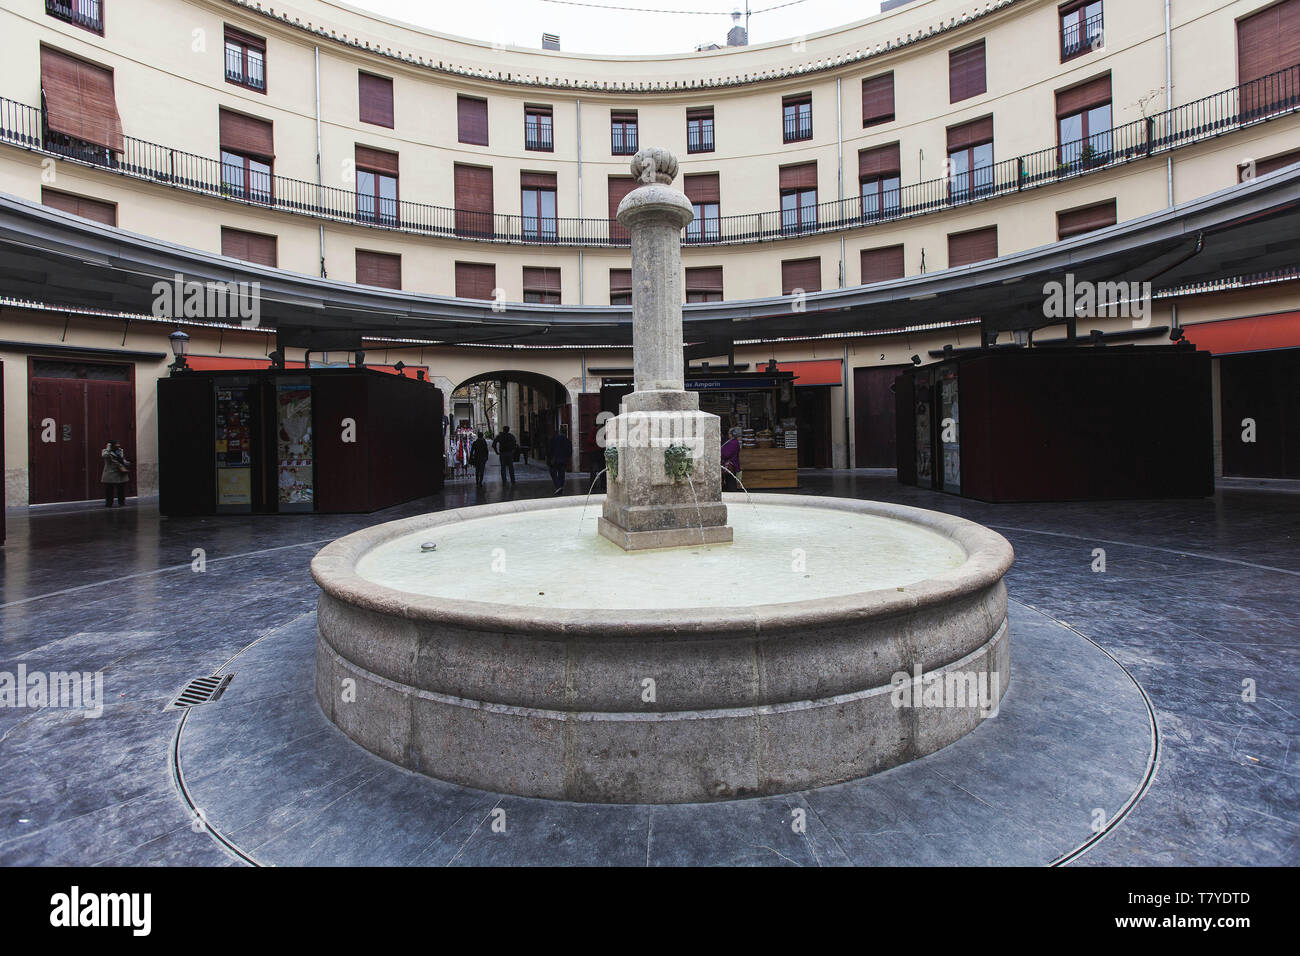 Spagna, Valencia, Placa Redonda, La Rotonda Foto piazza Federico  Meneghetti/Sintesi/Alamy Stock Photo Foto stock - Alamy